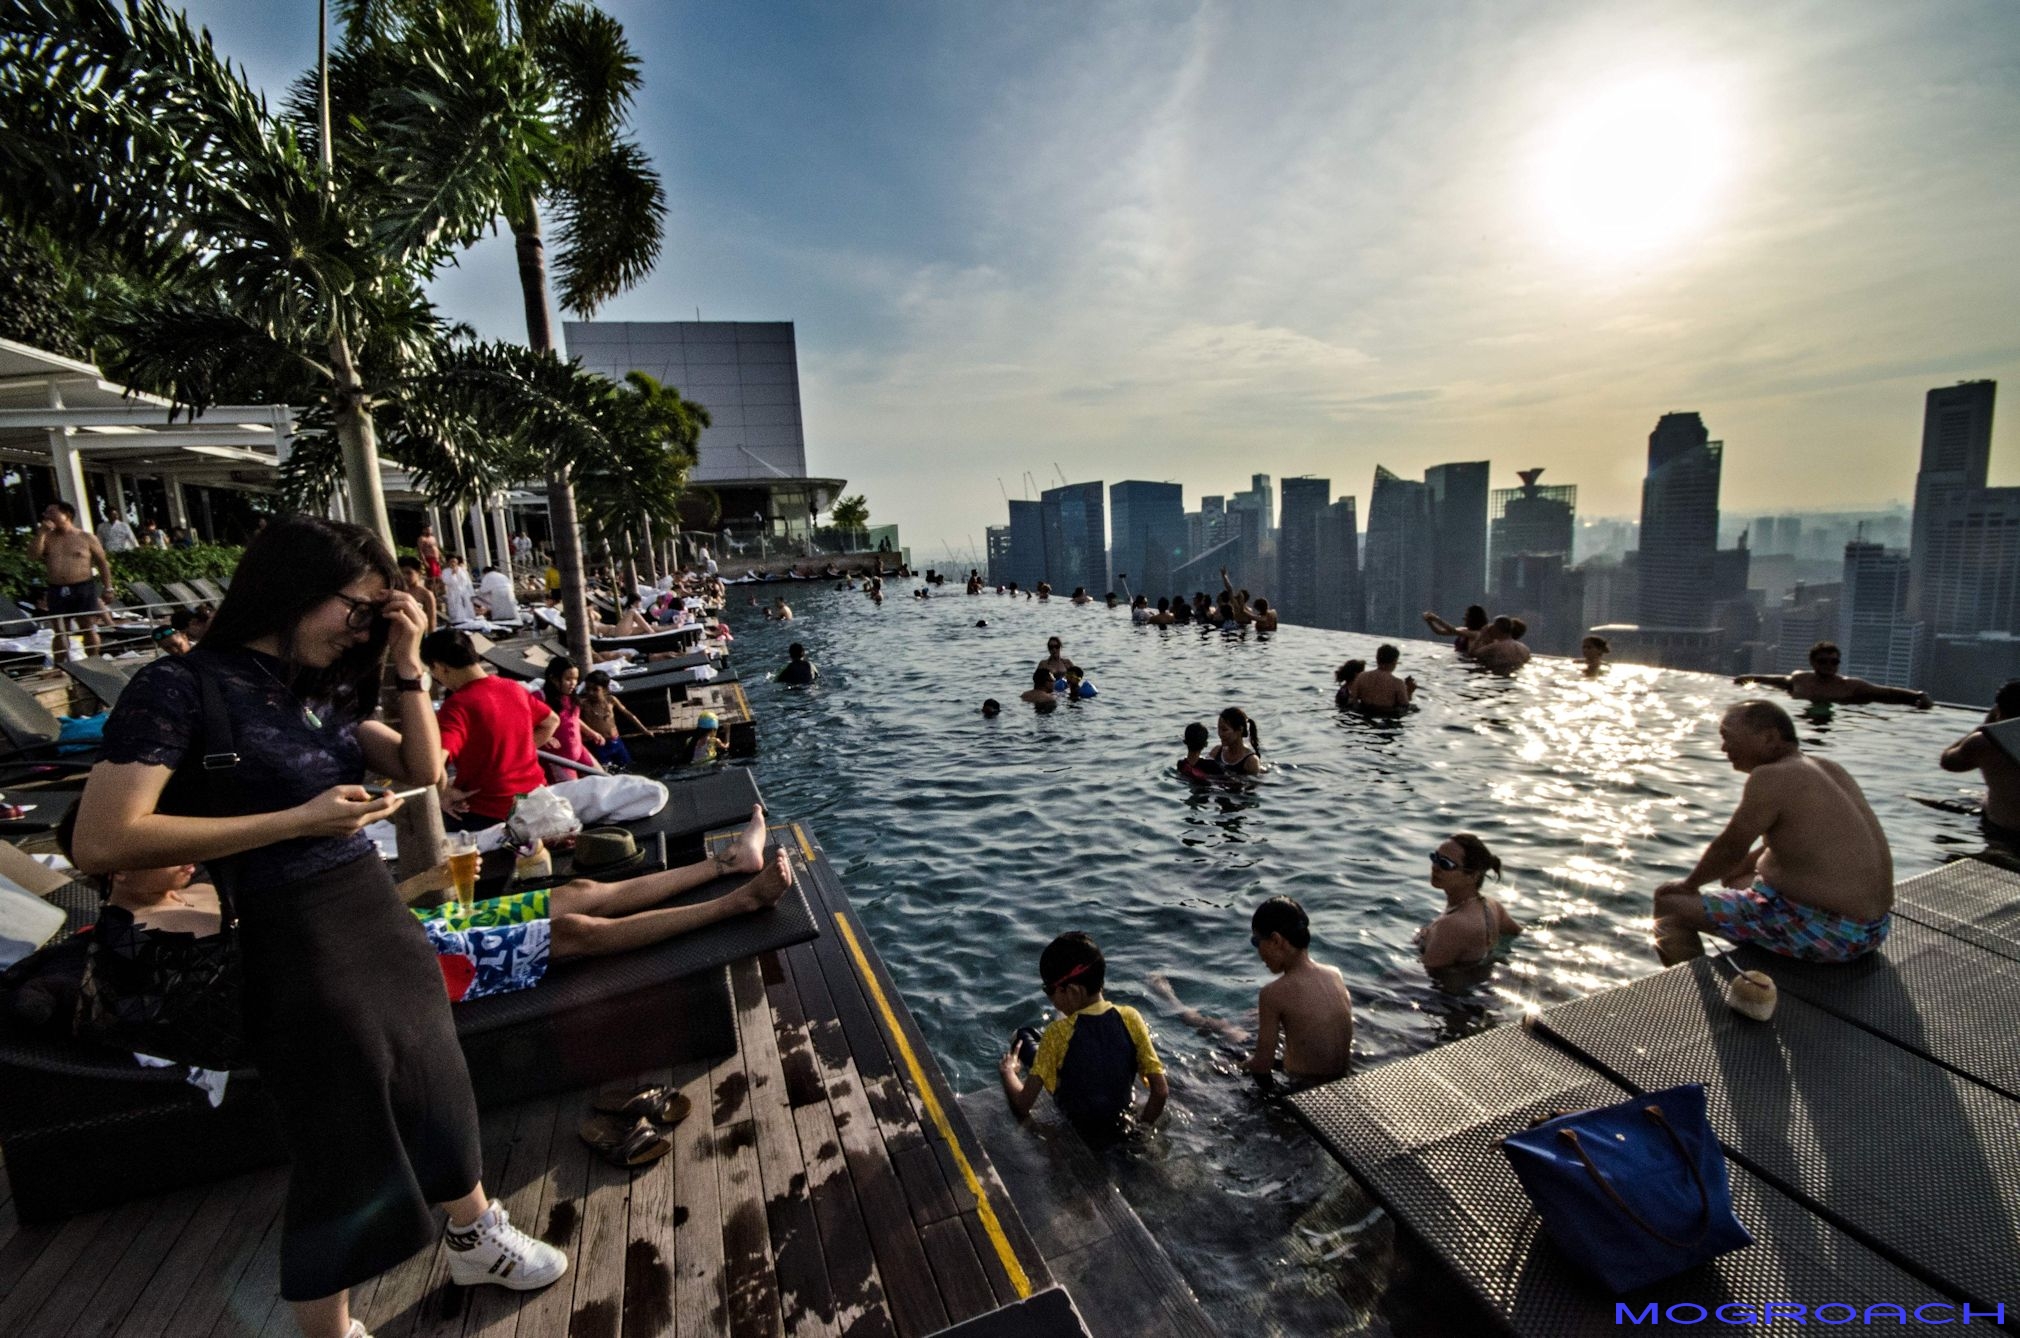 Marina Bay Sands Infinity Pool Singapur Mogroach